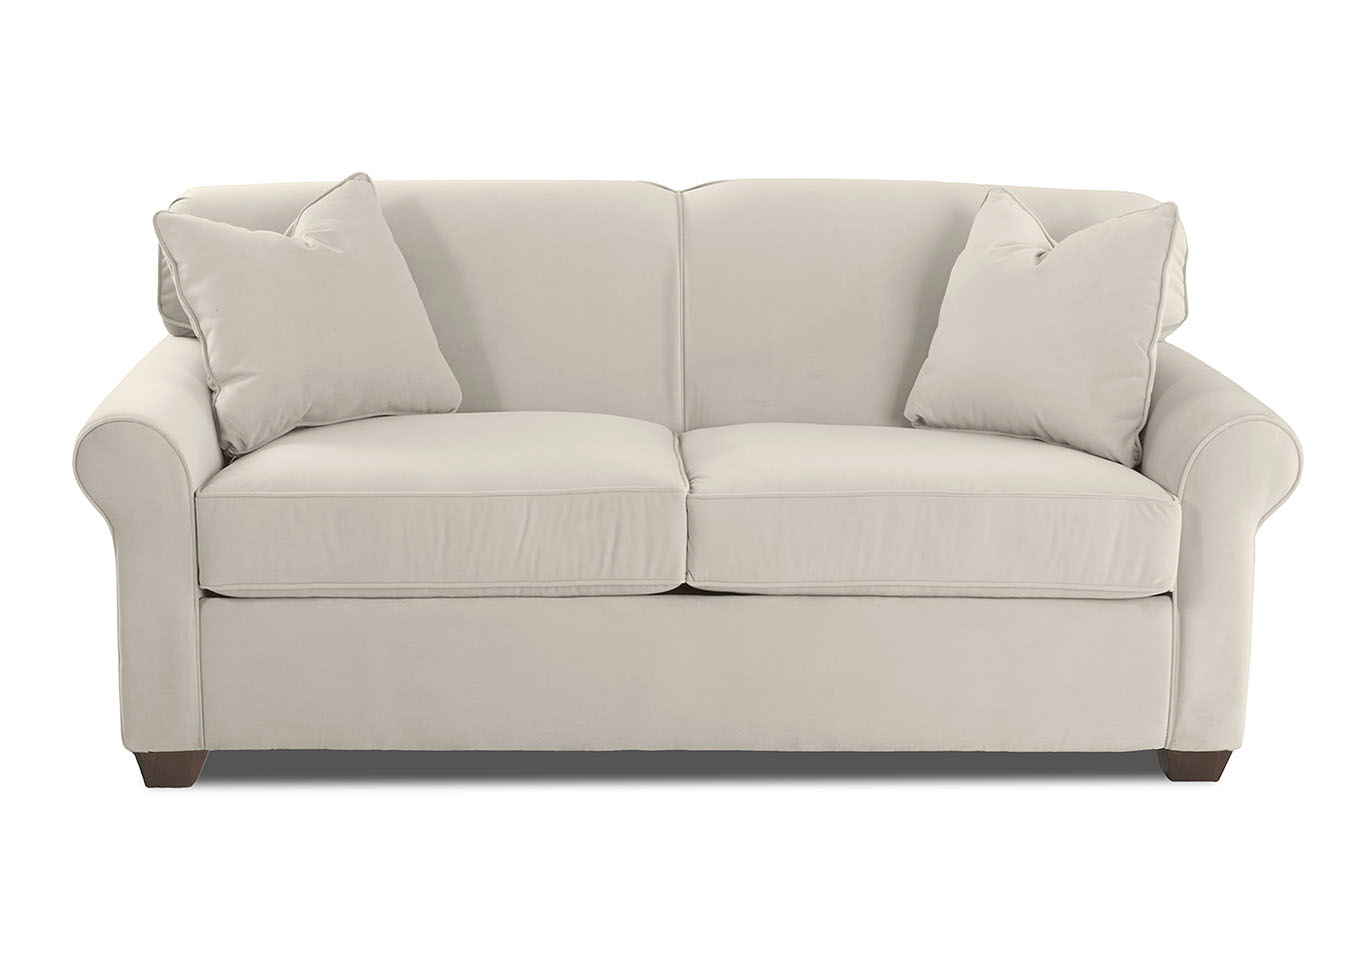 Mayhew Off-White Sleeper Fabric Sofa,Klaussner Home Furnishings